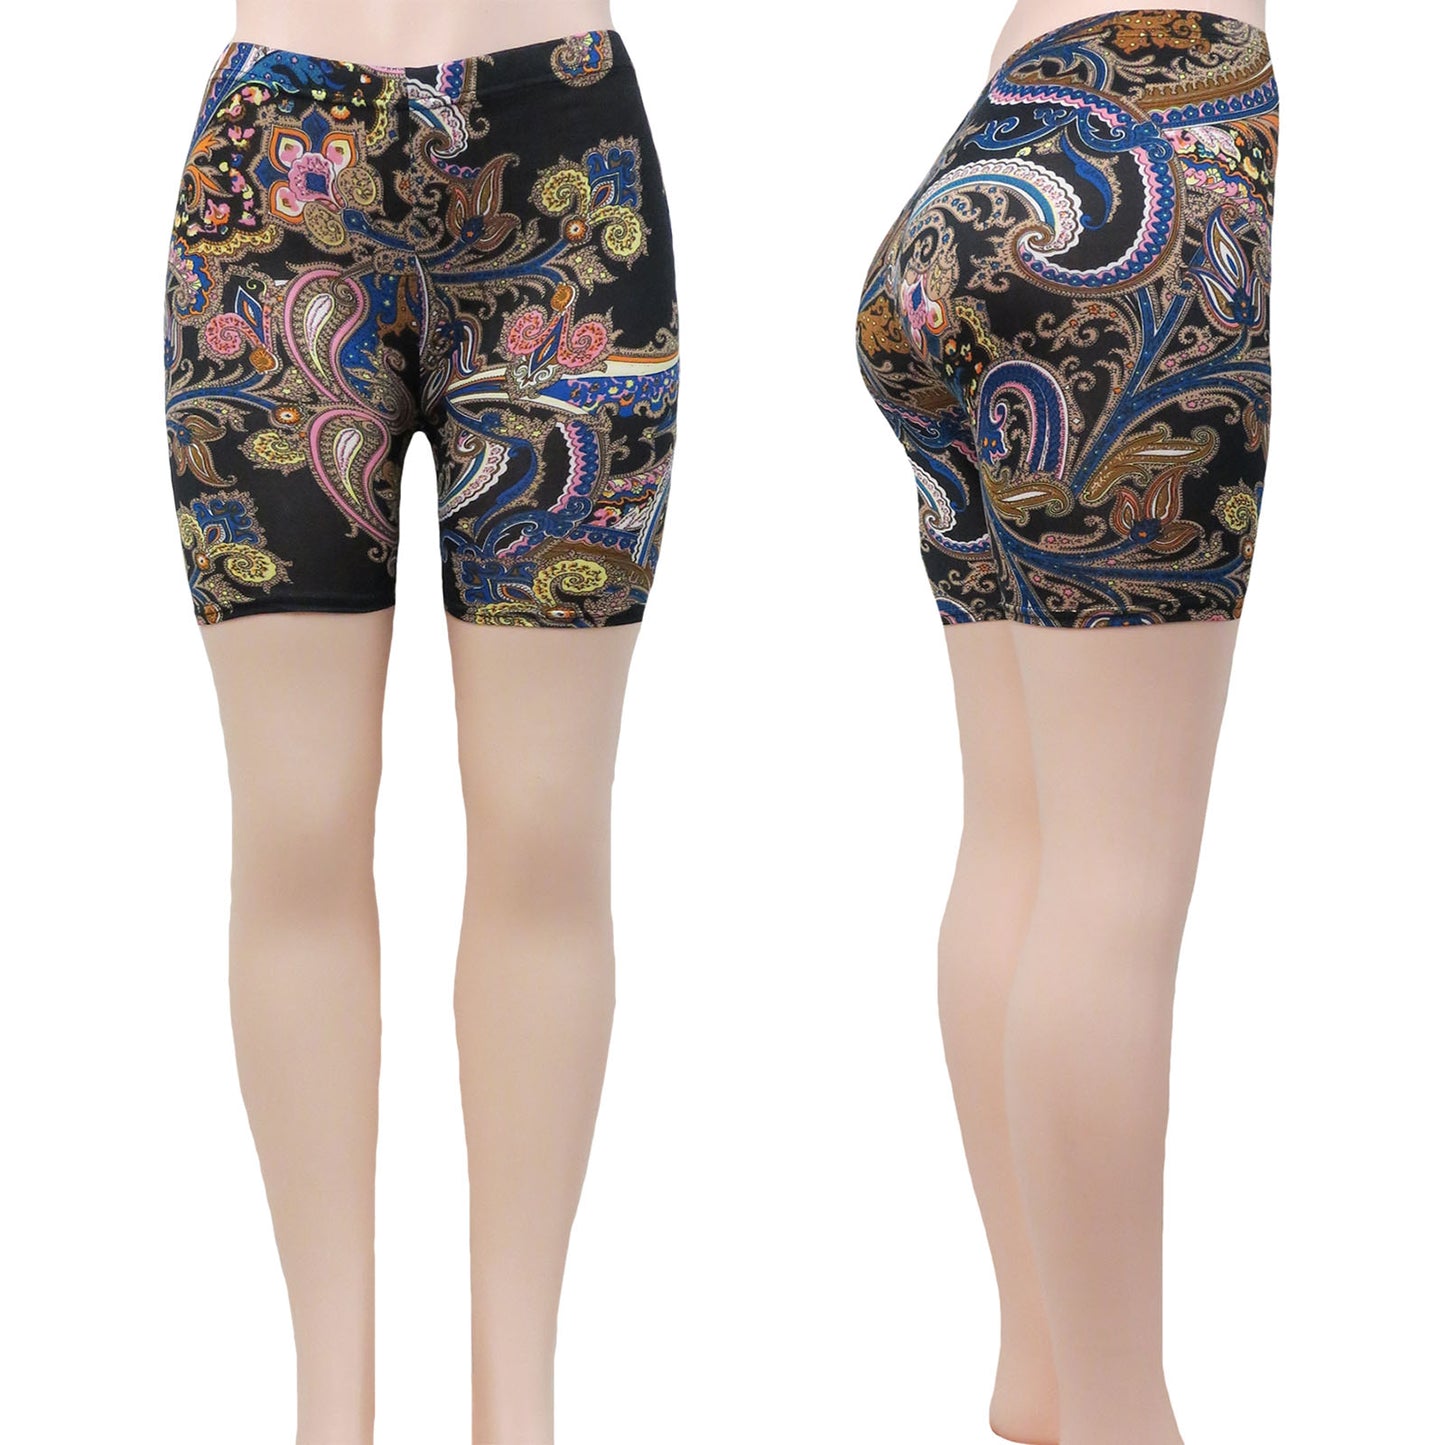 Women's Wholesale Bike Shorts in Floral Prints - Alessa Rochelle